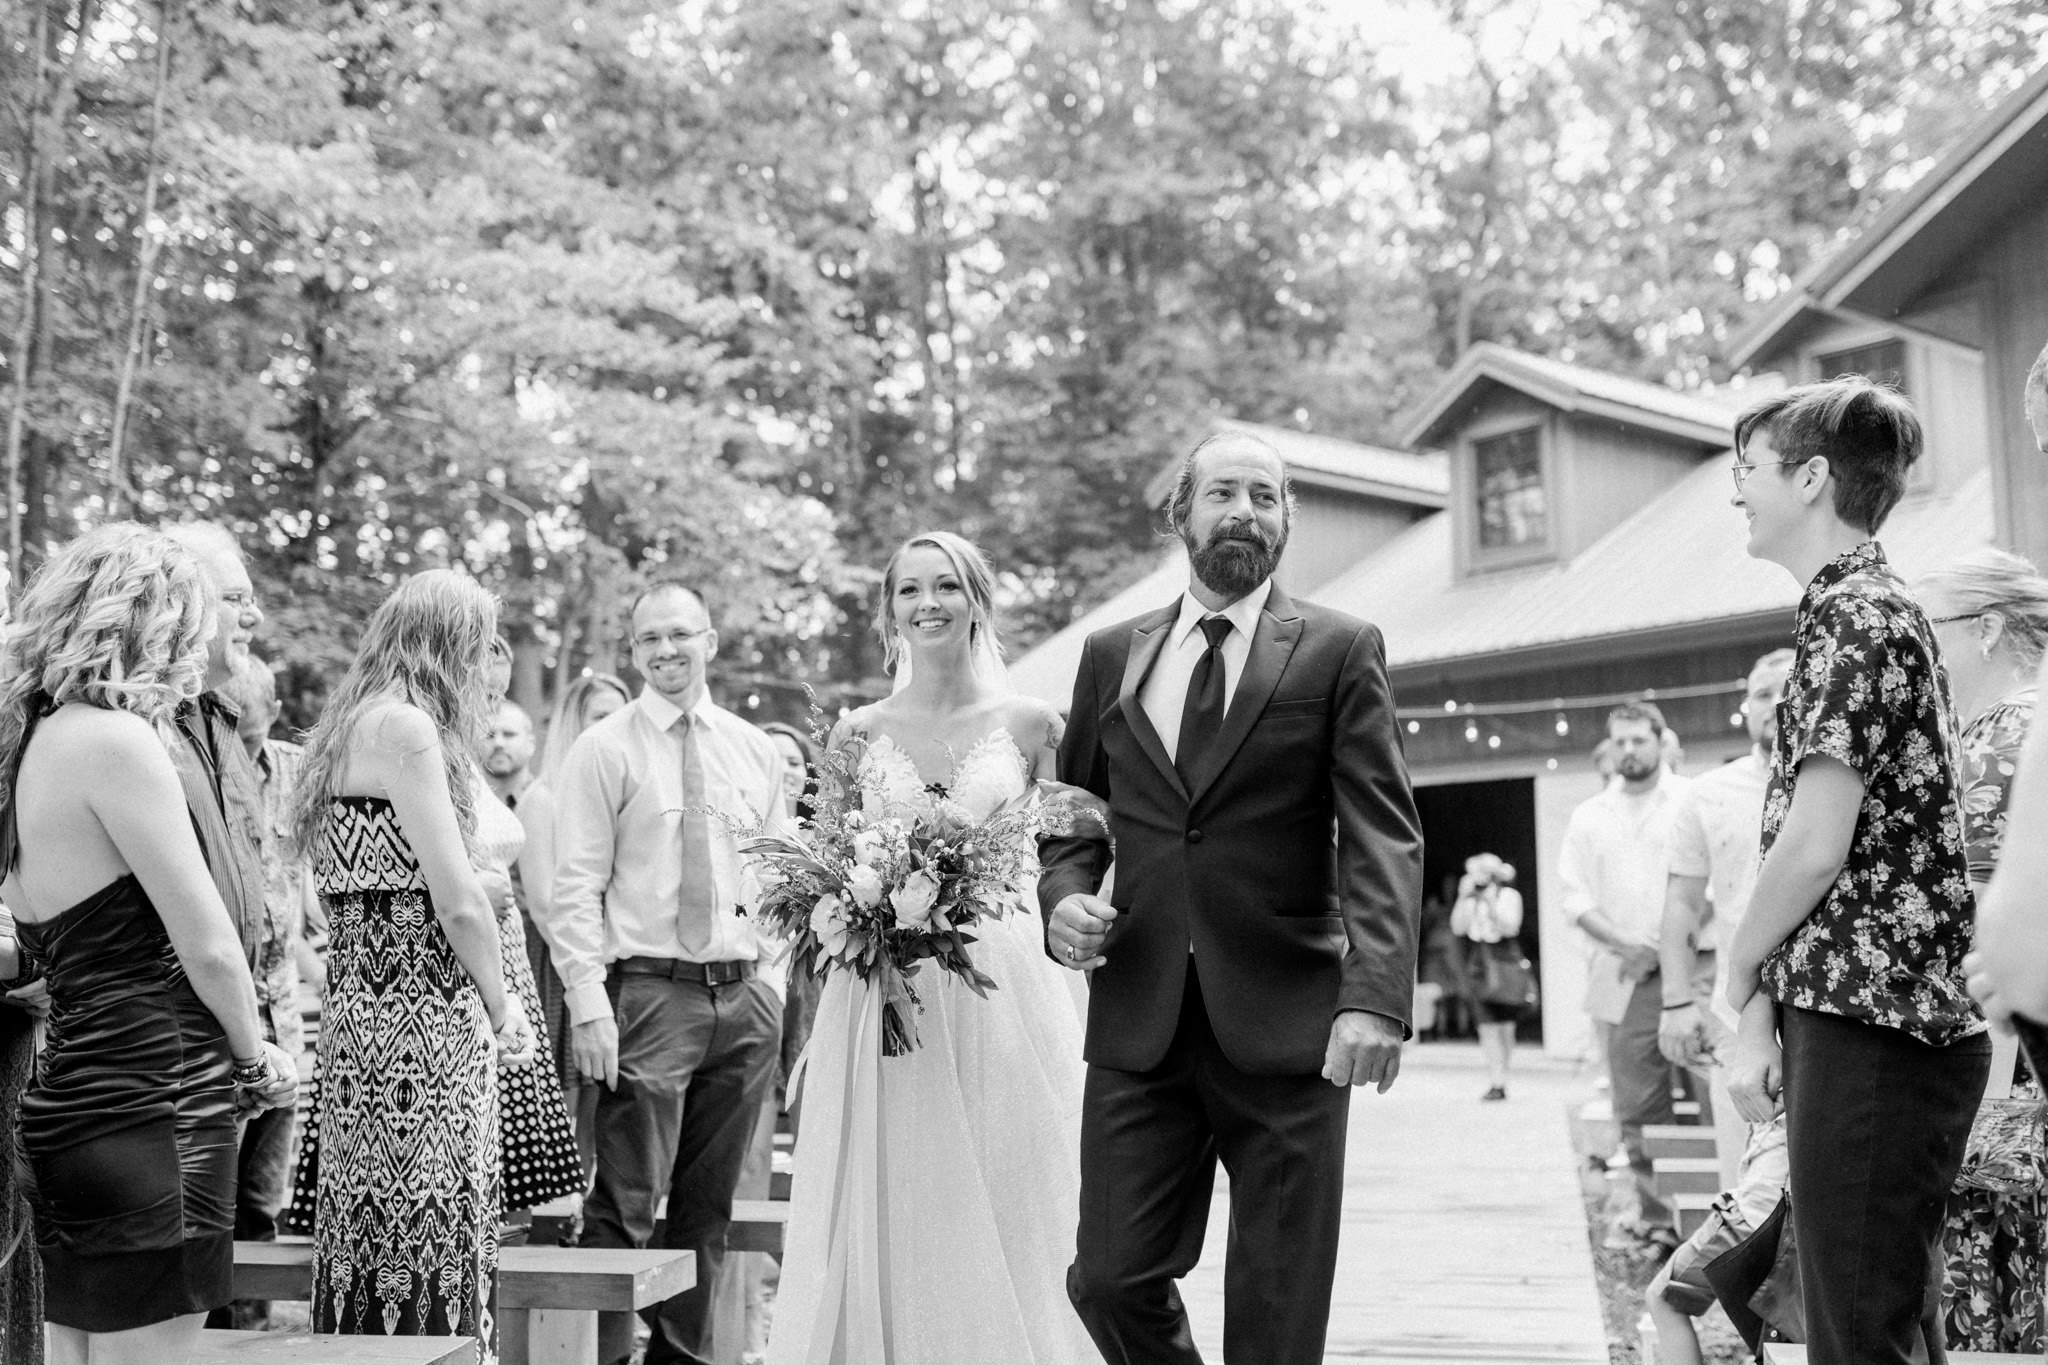 Fairytale Wedding In the Woods | Beauty and the Beast themed Wedding | Barn Wedding Reception | Low Back Wedding Dress | Light & Airy Wedding Photography | West Michigan Wedding Photographer